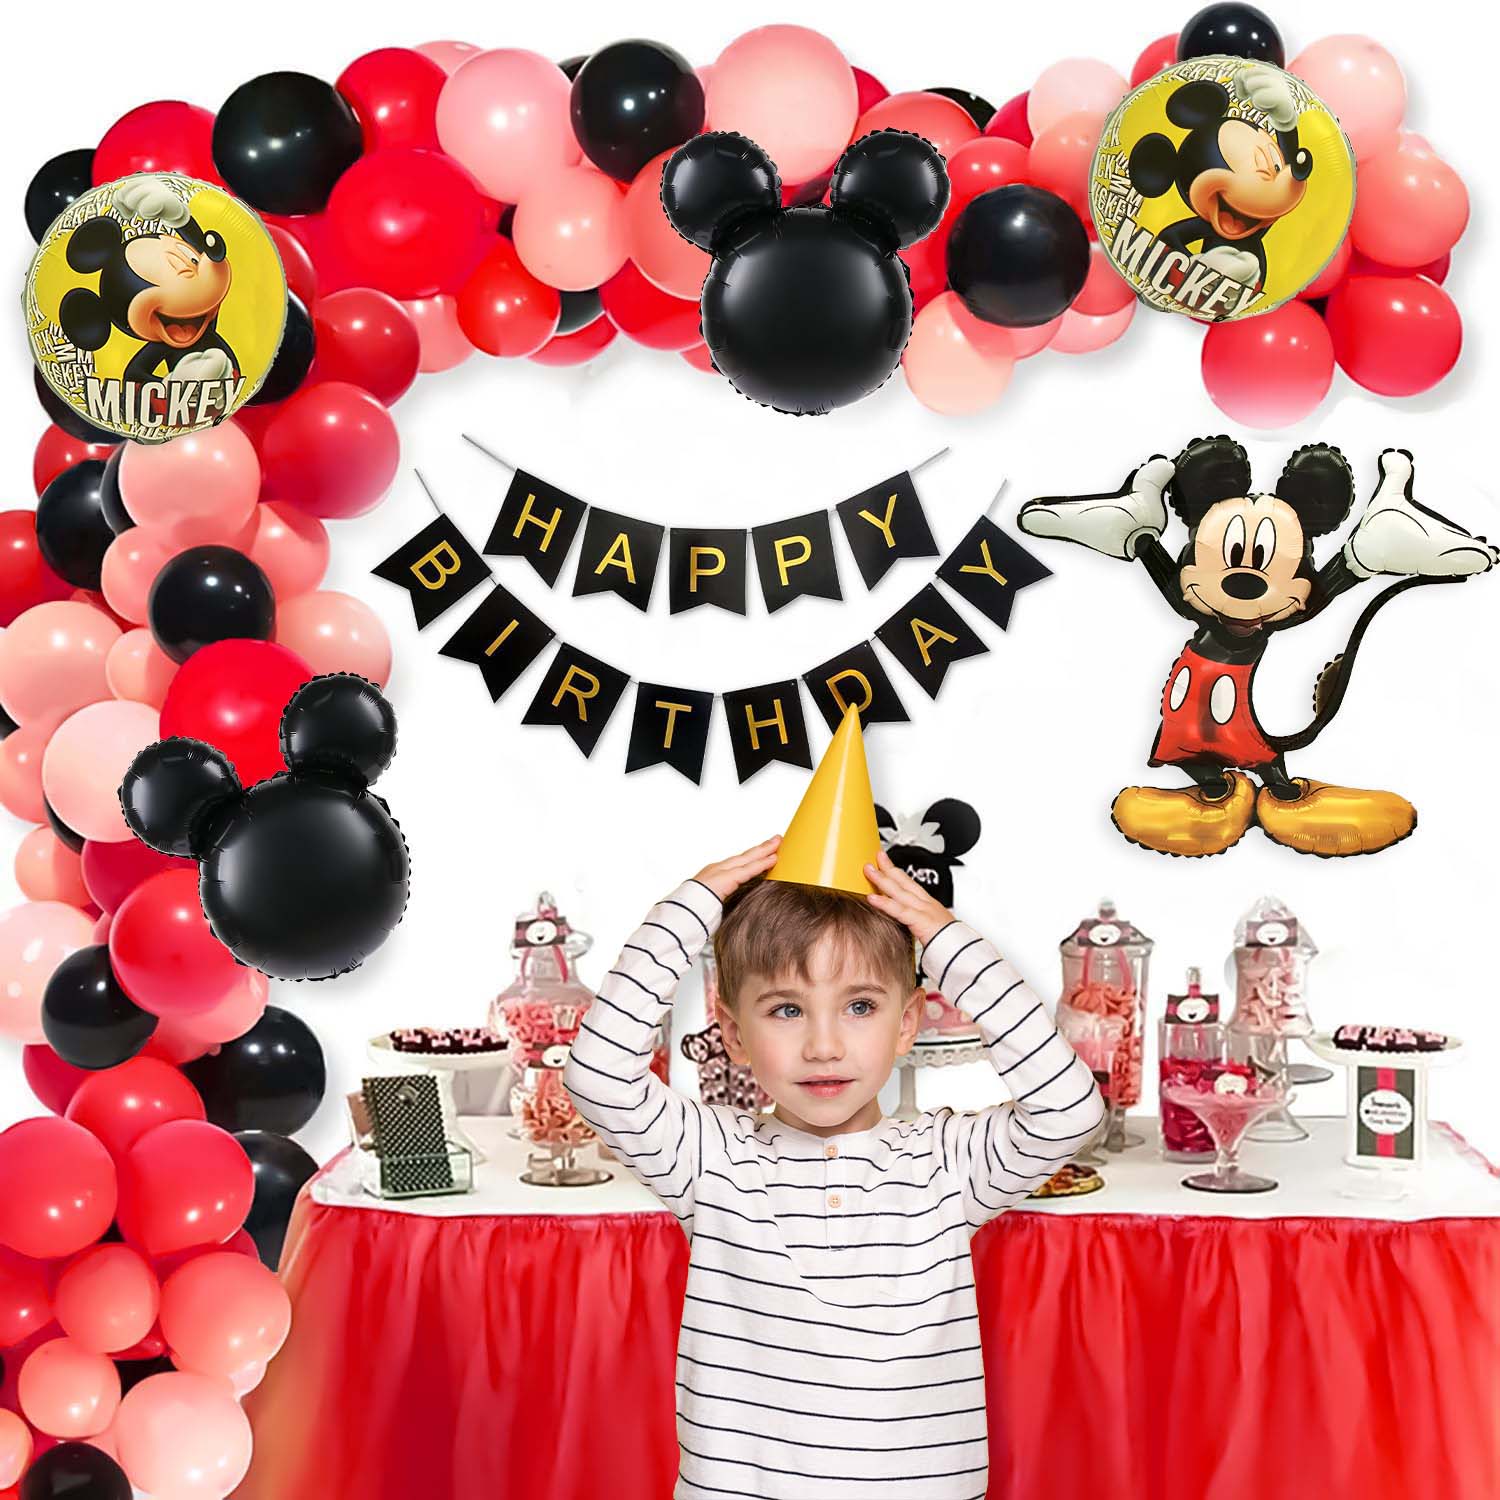 Mickey mouse theme birthday decor